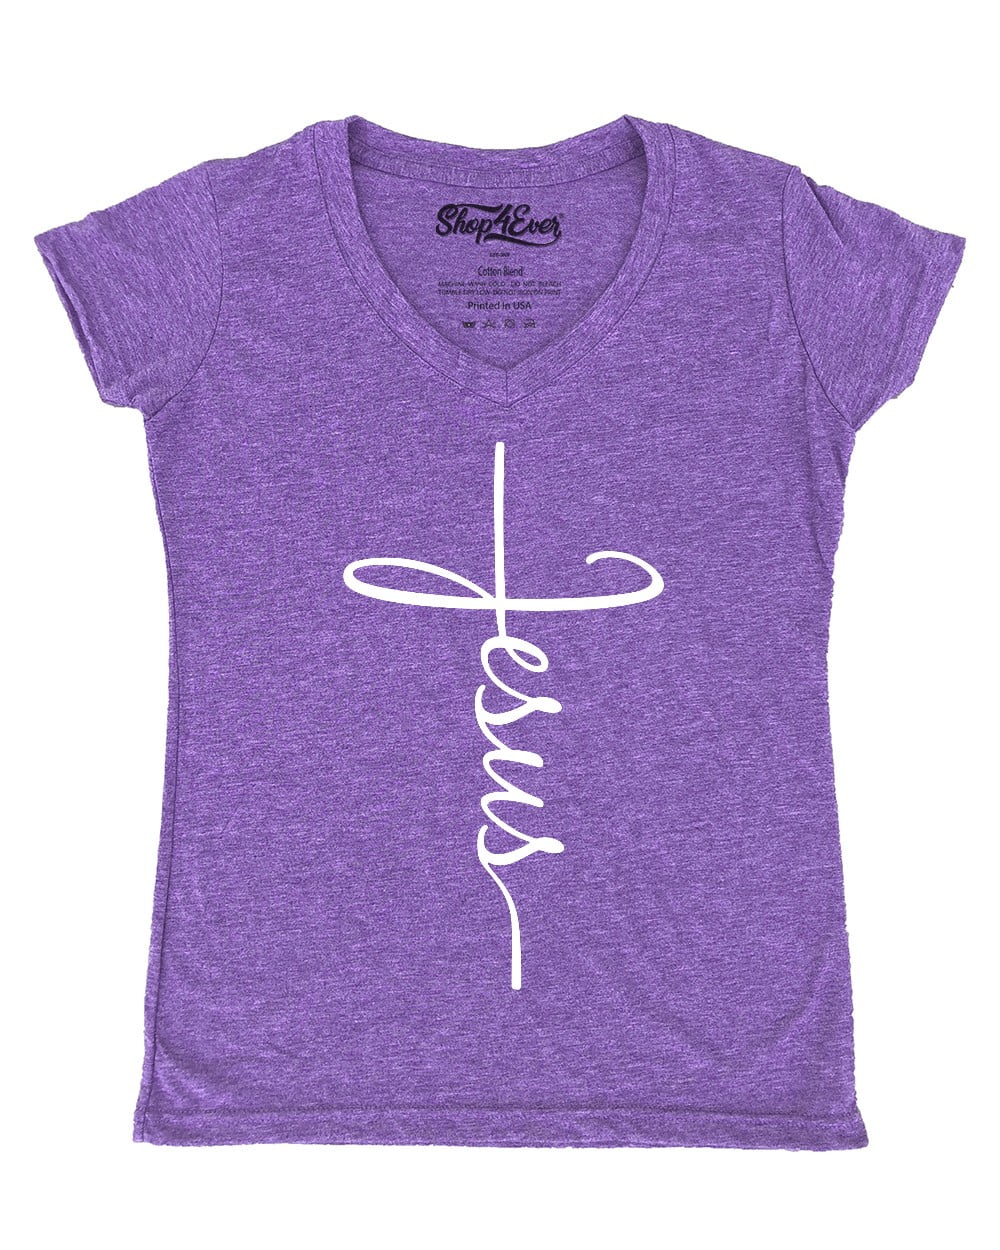 Shop4Ever Women's Jesus Cross Religious Slim Fit V-Neck T-Shirt Large ...